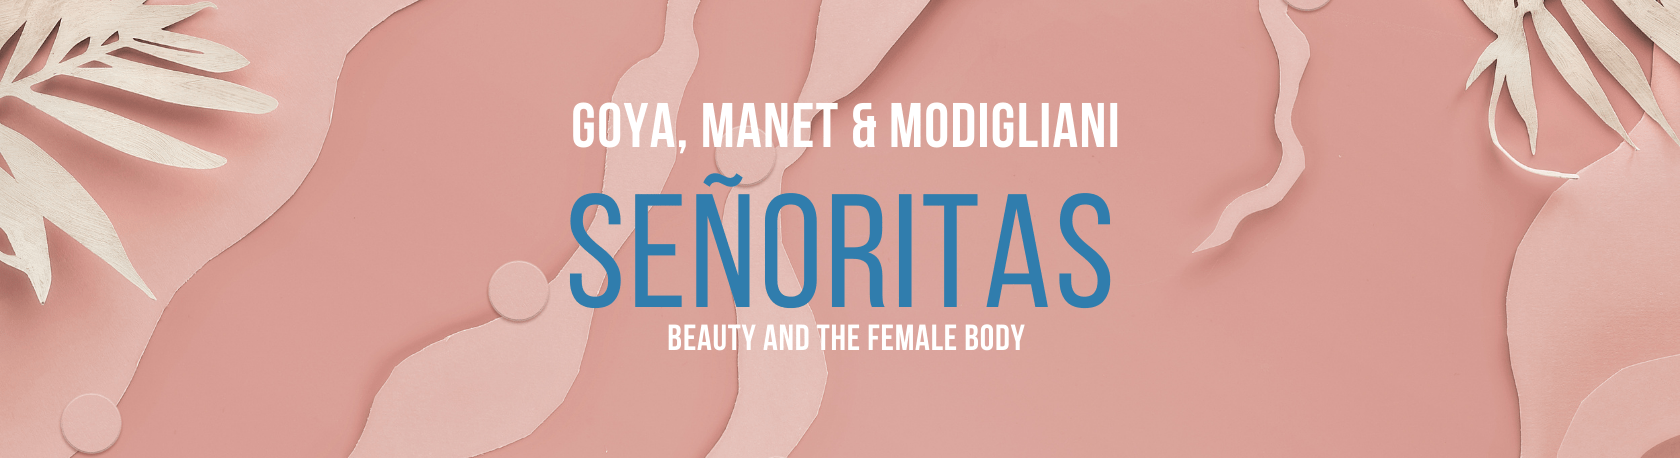 Online Art Talk: SEÑORITAS (Goya, Manet & Modigliani) - Easy Español